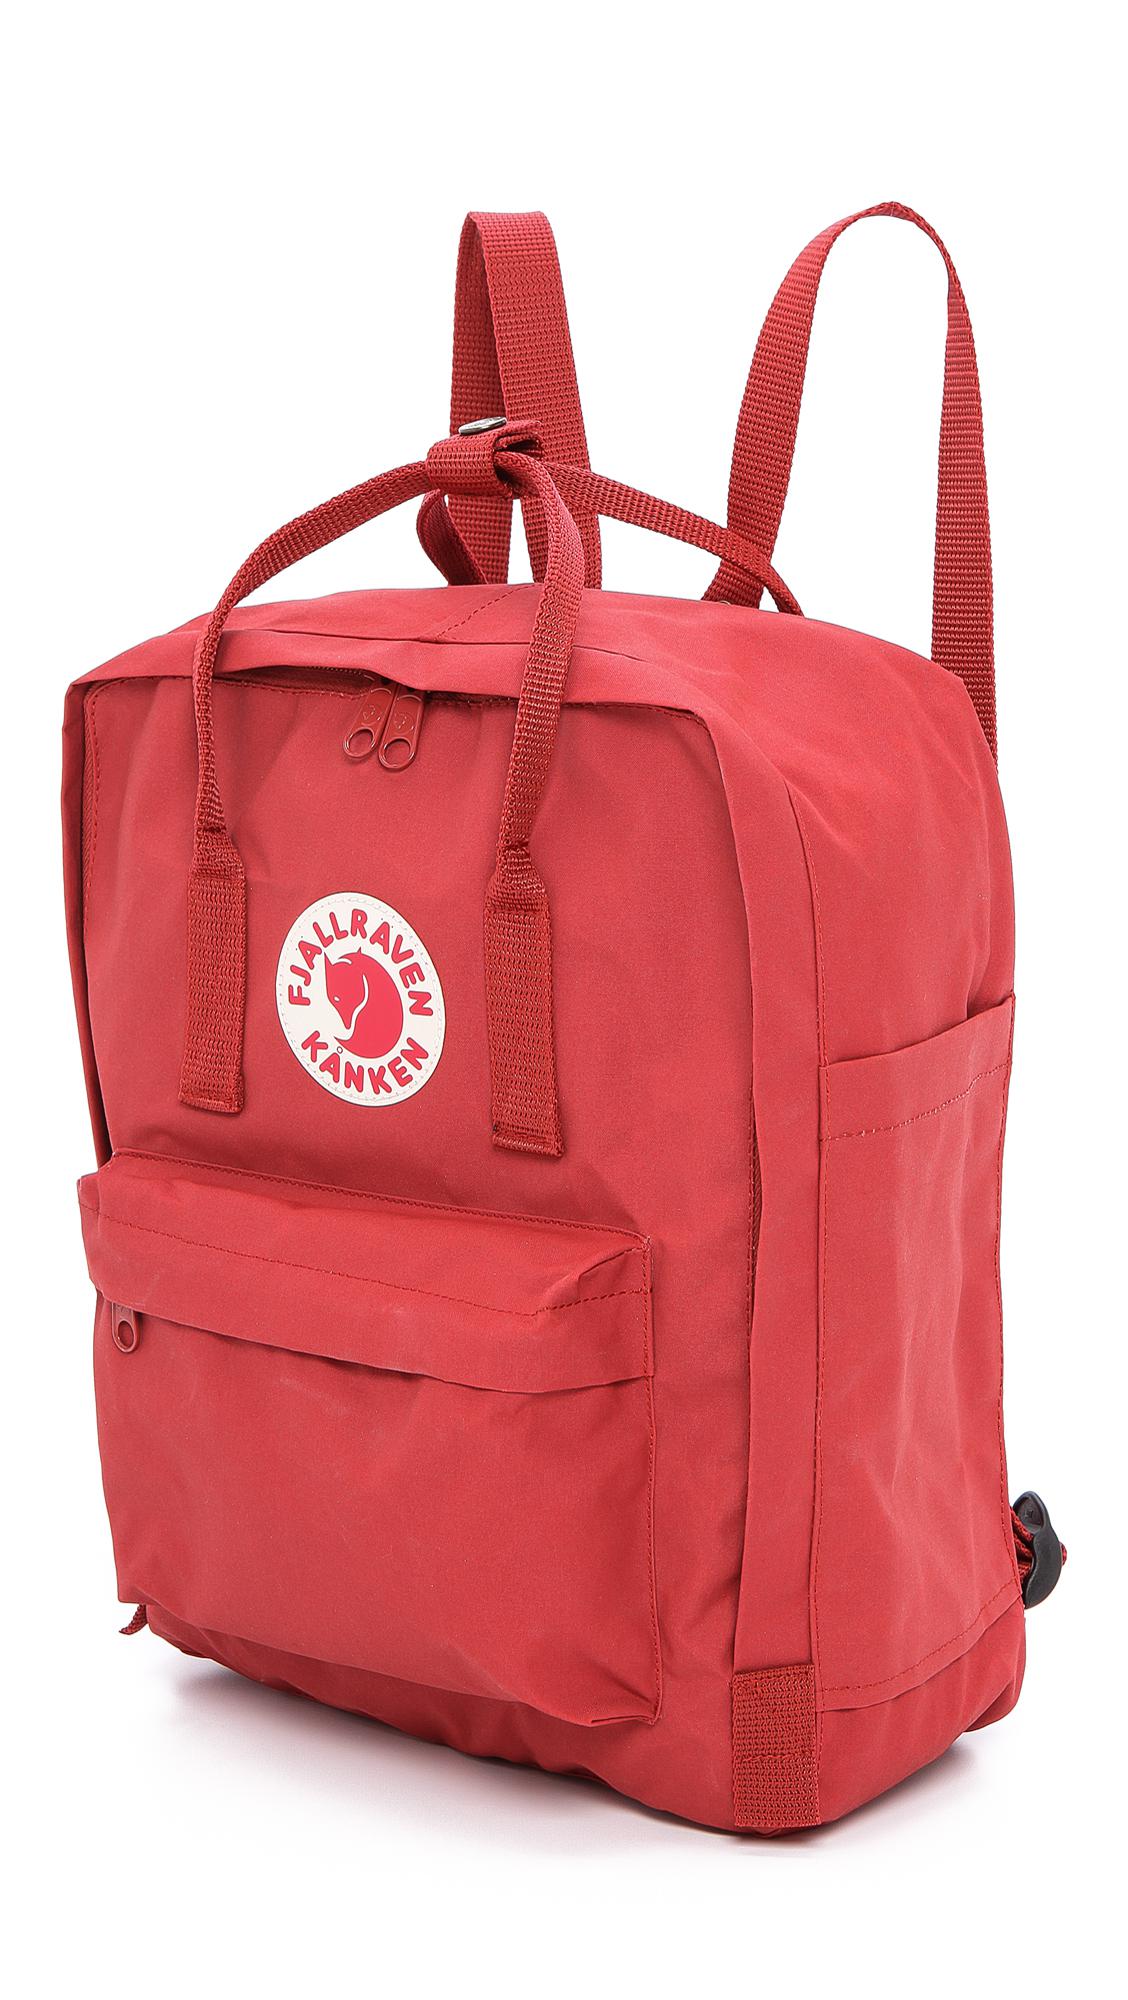 Fjallraven Synthetic Kanken Backpack in Deep Red (Red) for Men - Lyst